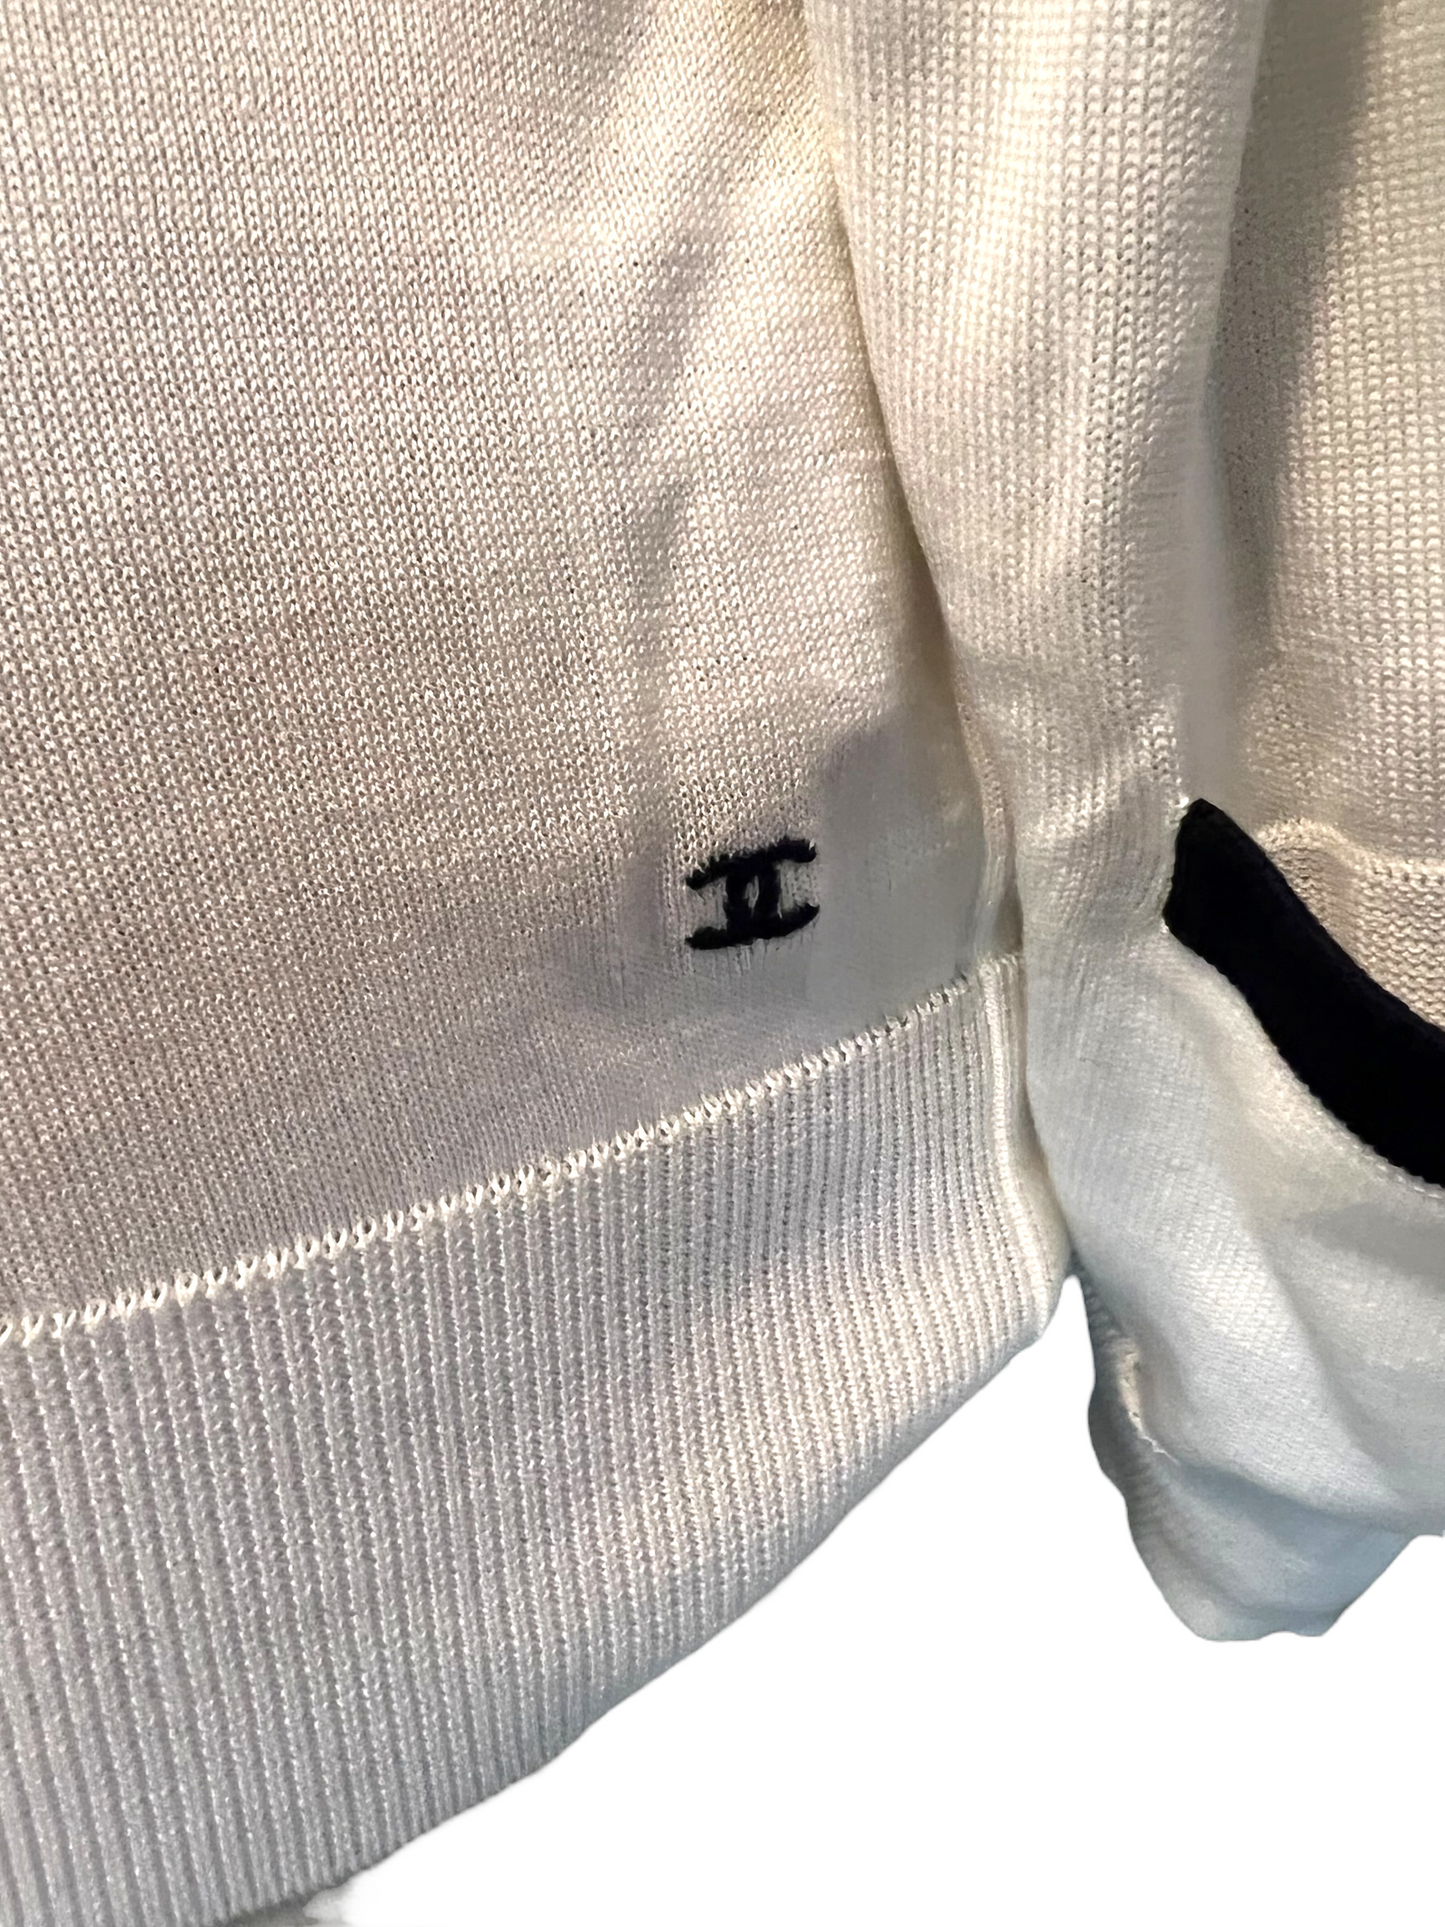 Chanel Off White 96P Size 38 Cardigan Set